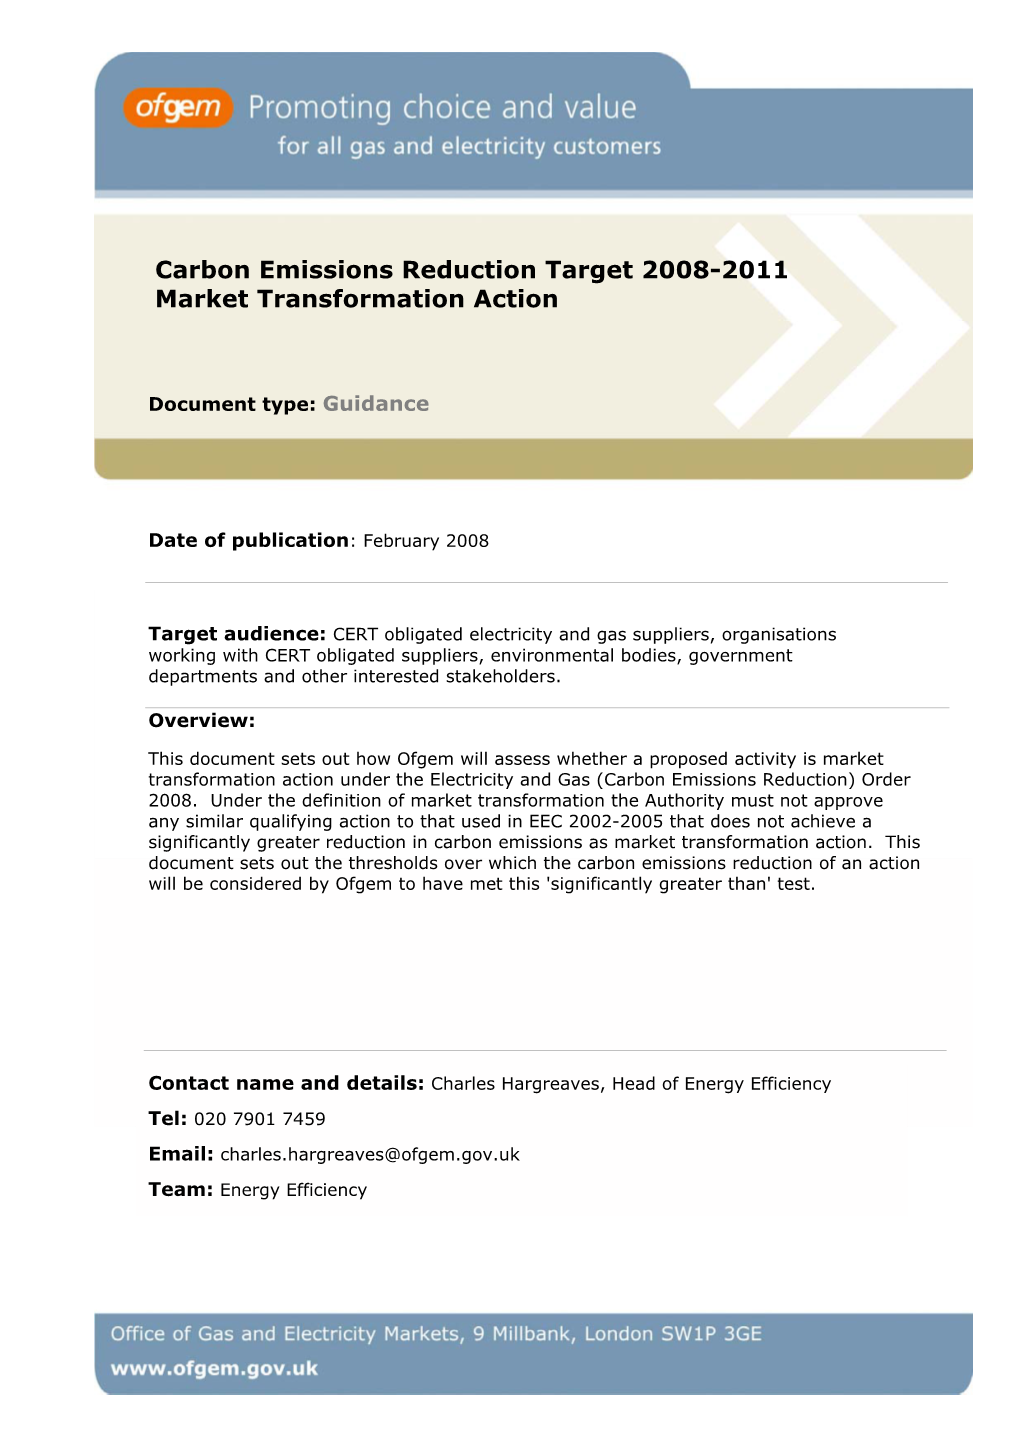 Carbon Emissions Reduction Target 2008-2011 Market Transformation Action